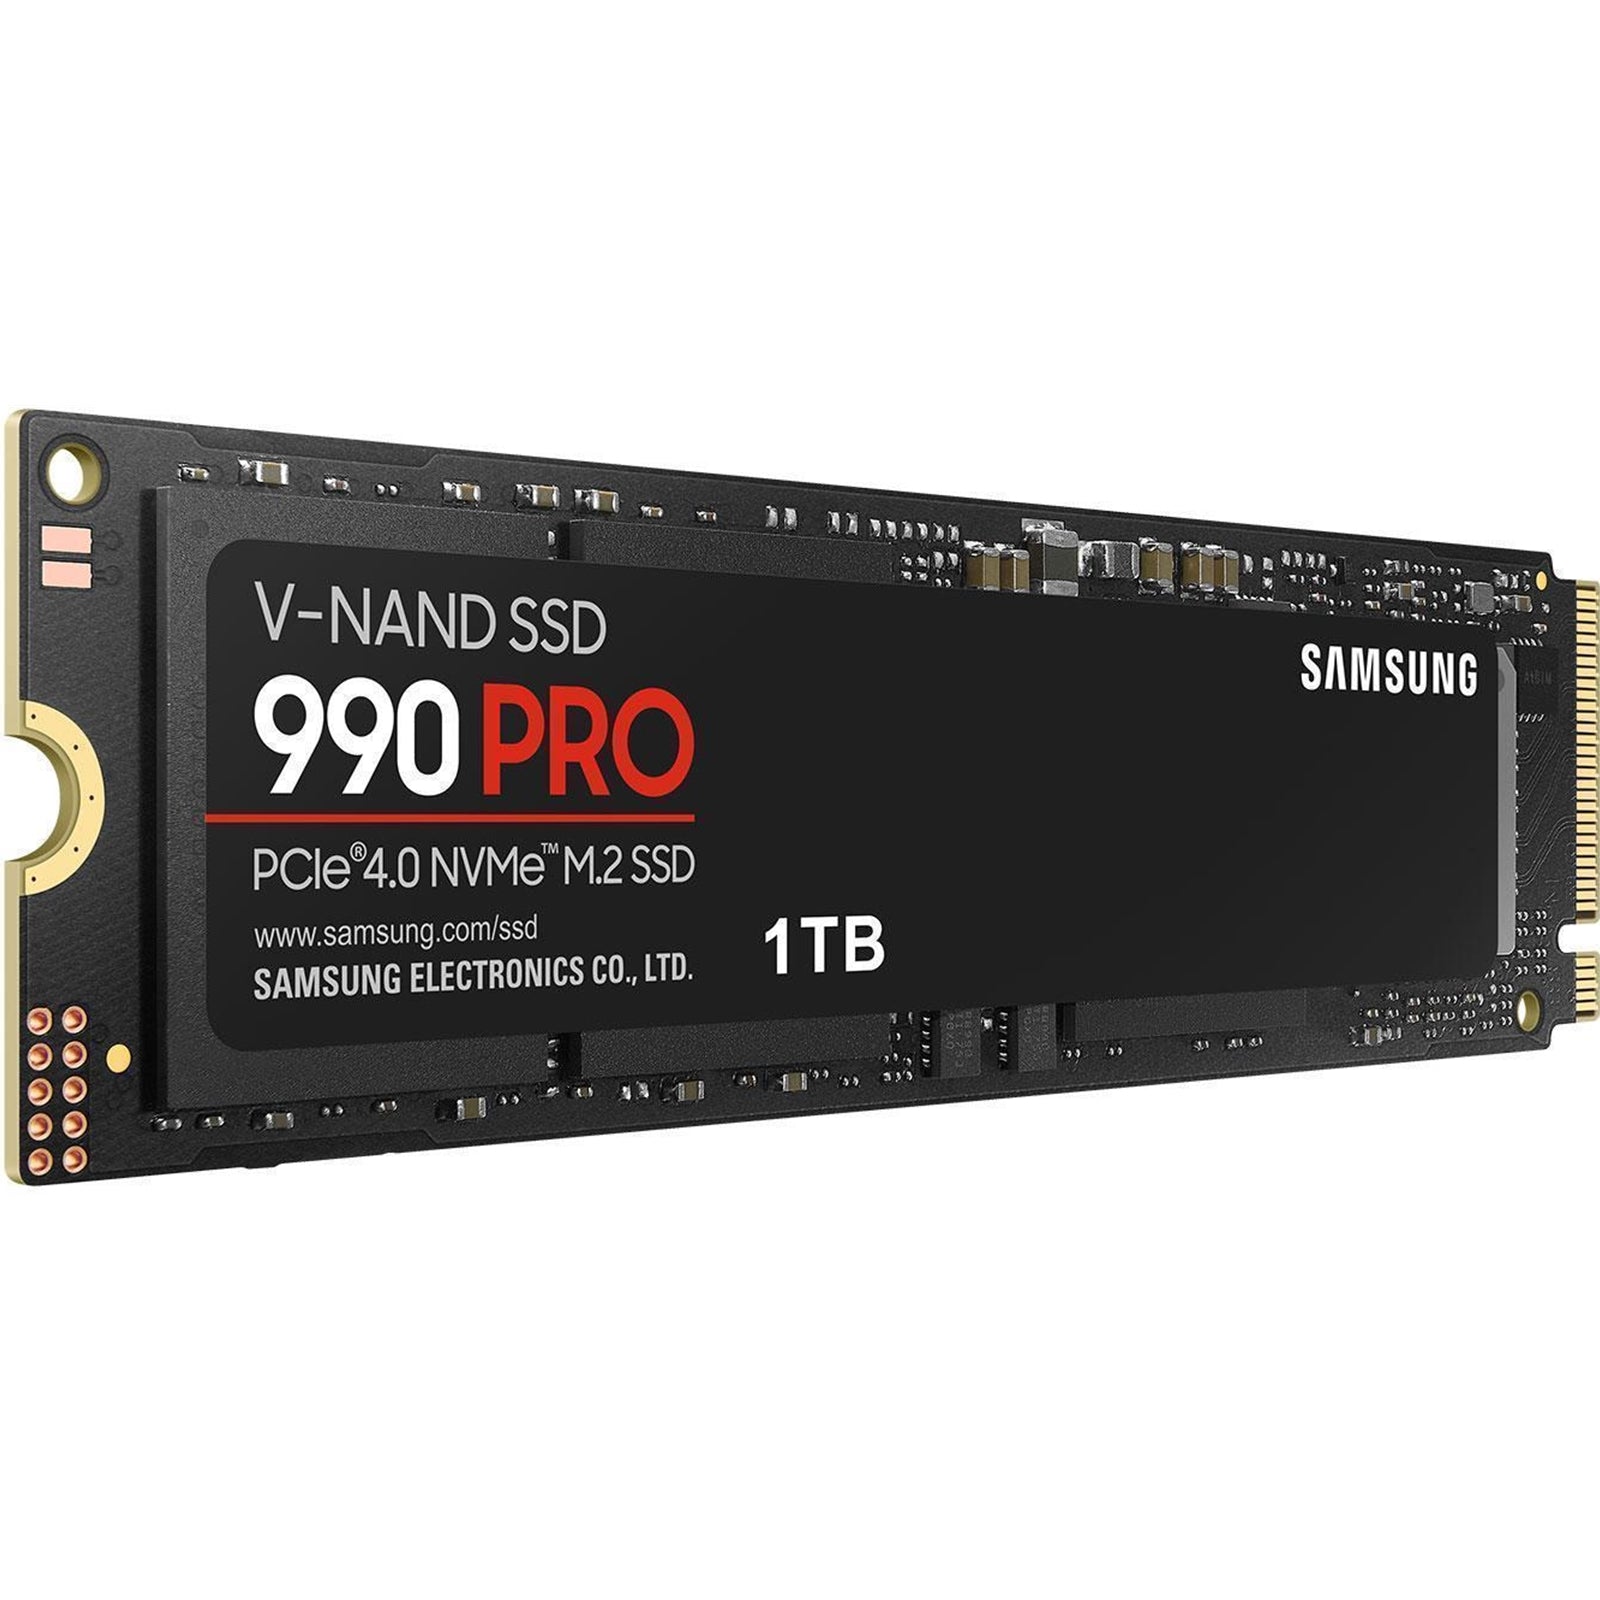 Samsung 990 PRO 1TB NVMe M.2 SSD Peak PCIe 4.0 Performance